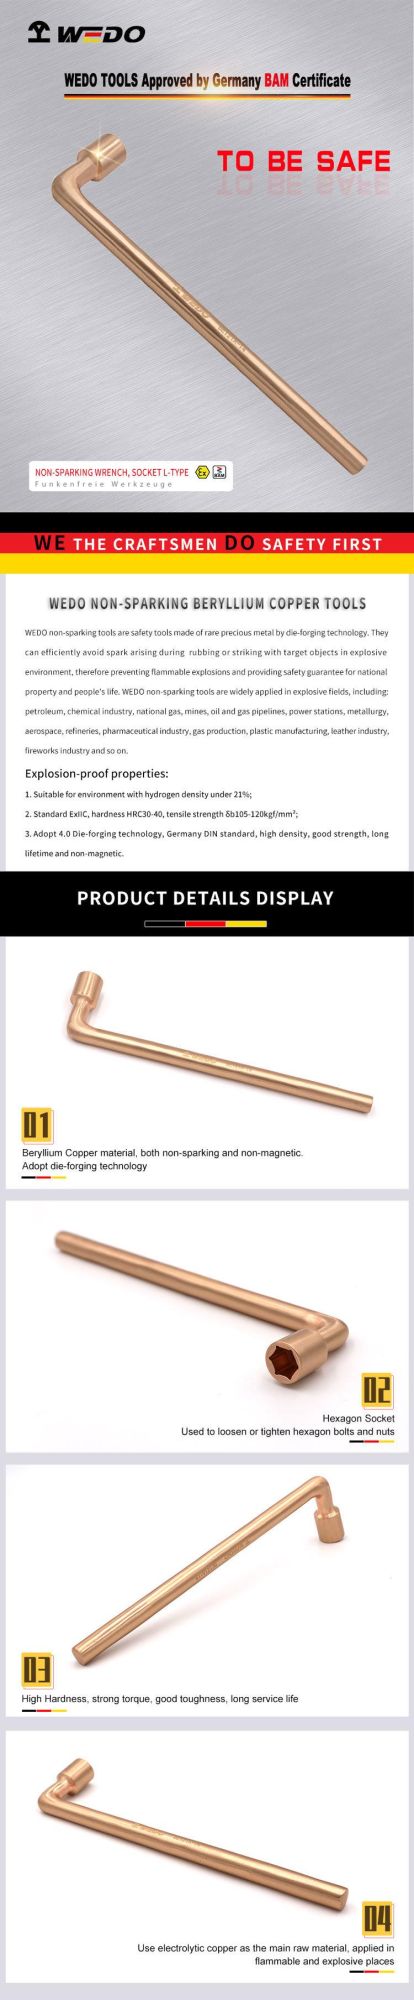 WEDO Beryllium Copper Spanner Non-Sparking Socket Wrench L-Type Bam/FM/GS Certified